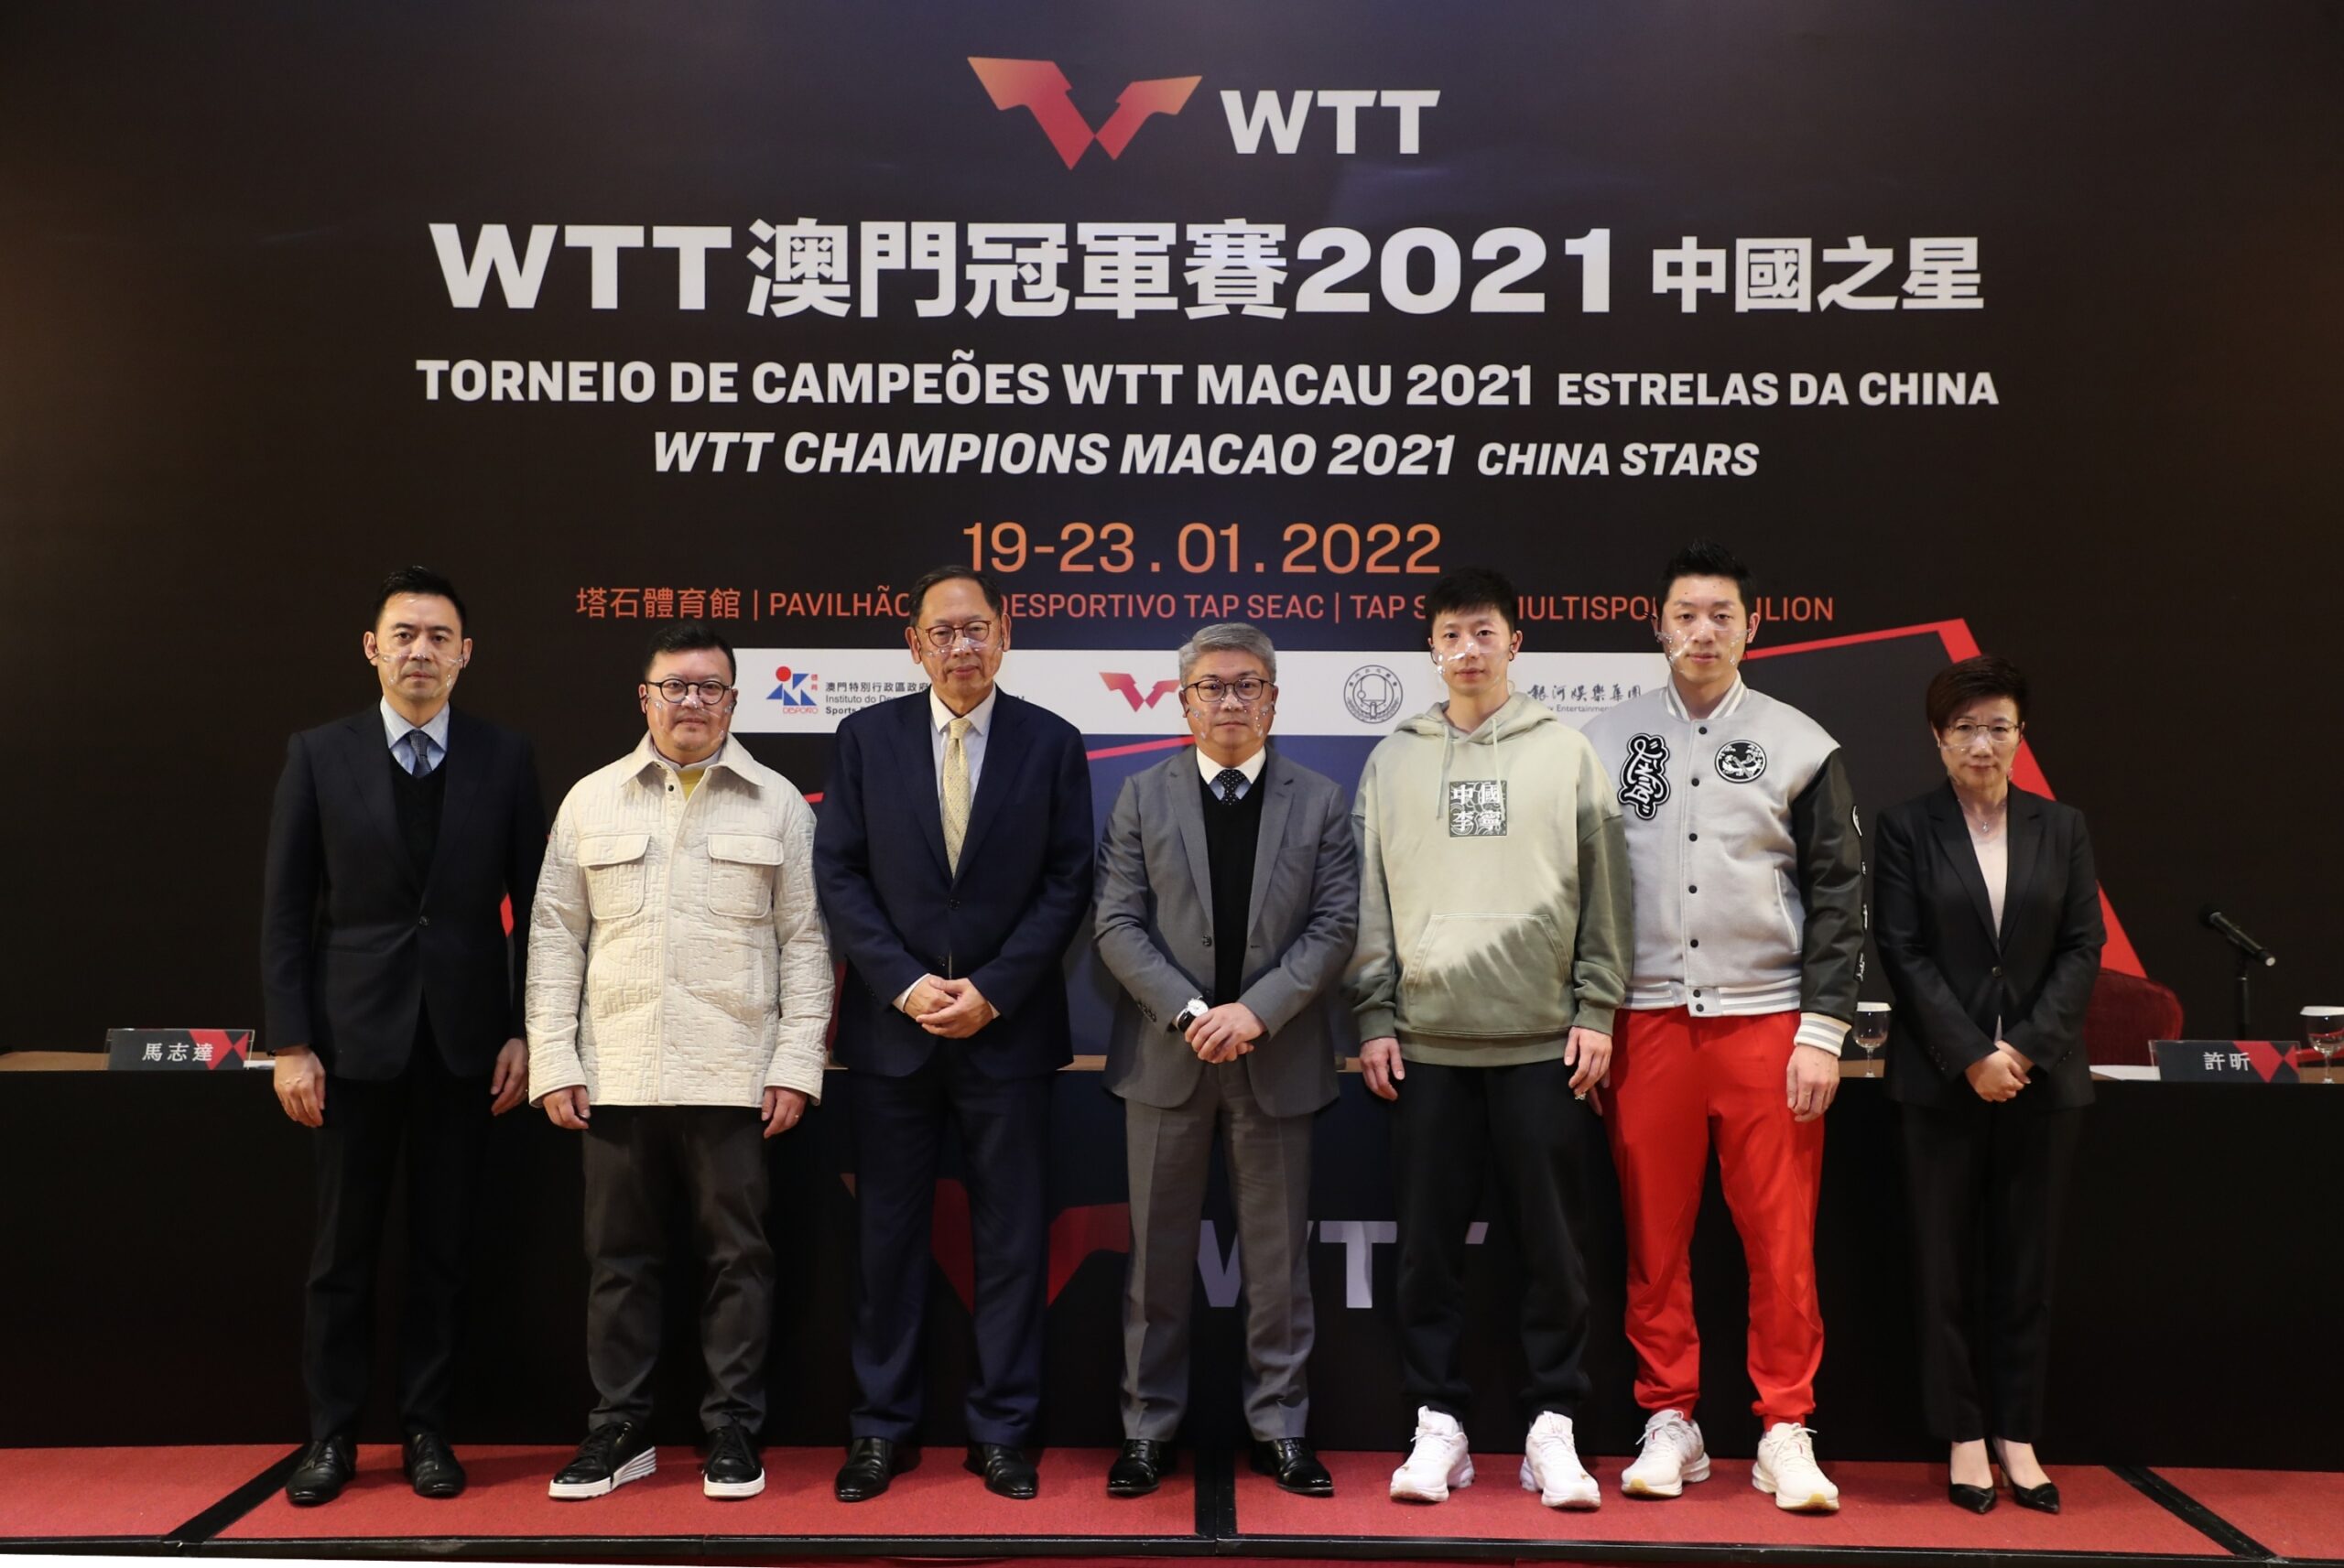 「WTT 澳門冠軍賽 2021中國之星」將於1月19日至23日舉行